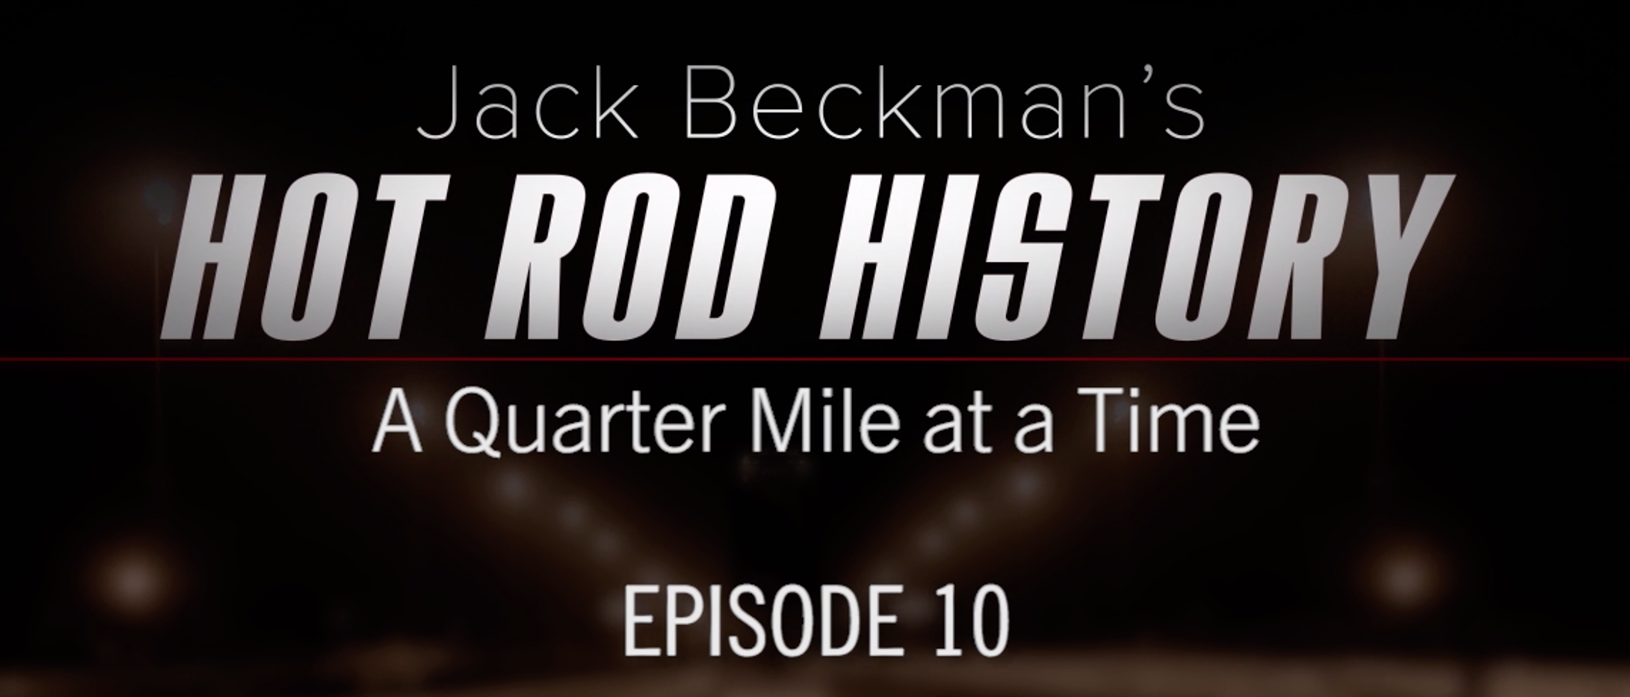 Jack Beckman’s Hot Rod History a Quarter-Mile at a Time – Episode 10